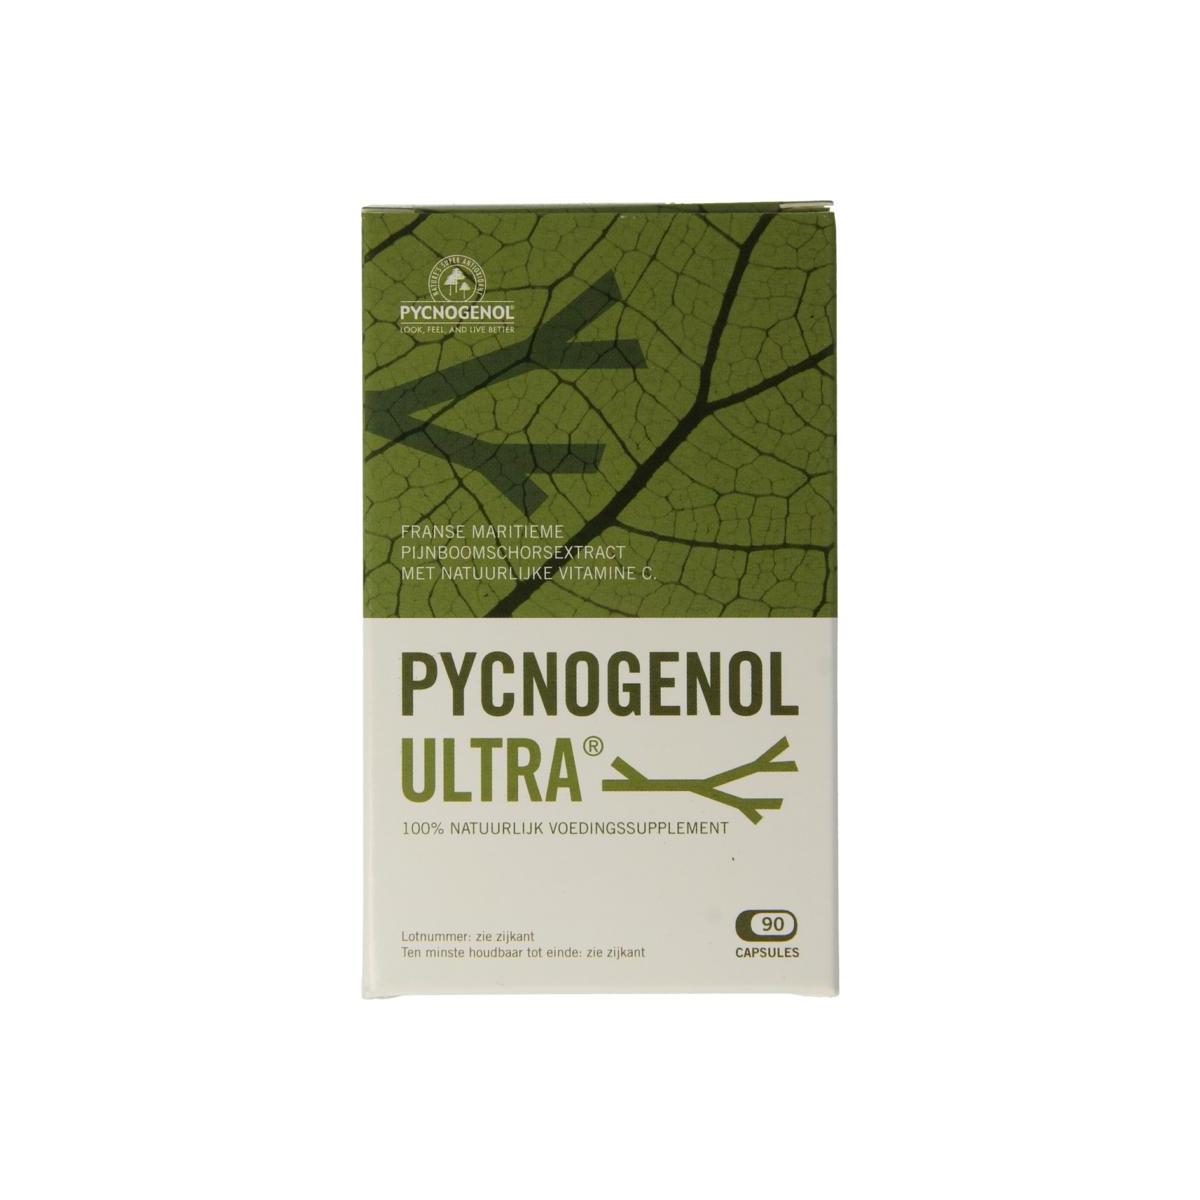 Pycnogenol ultra